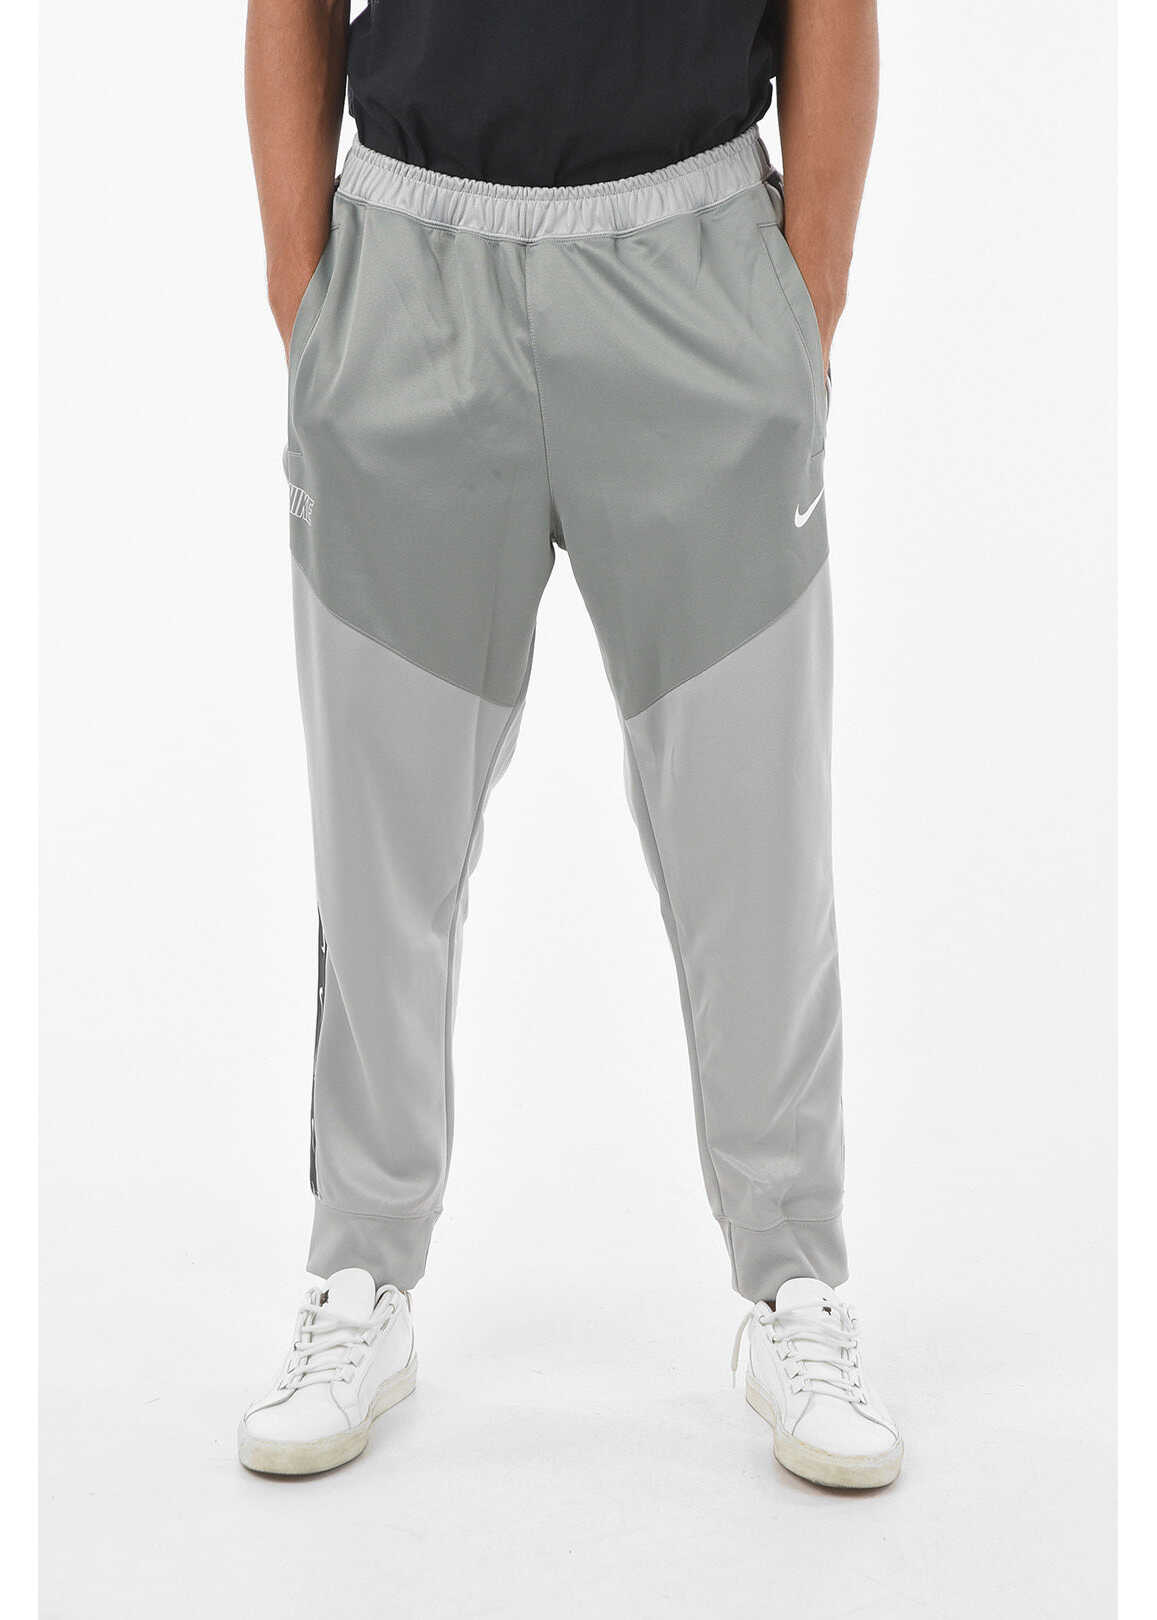 Nike Logoed Side Band 2 Pockets Joggers Gray image6